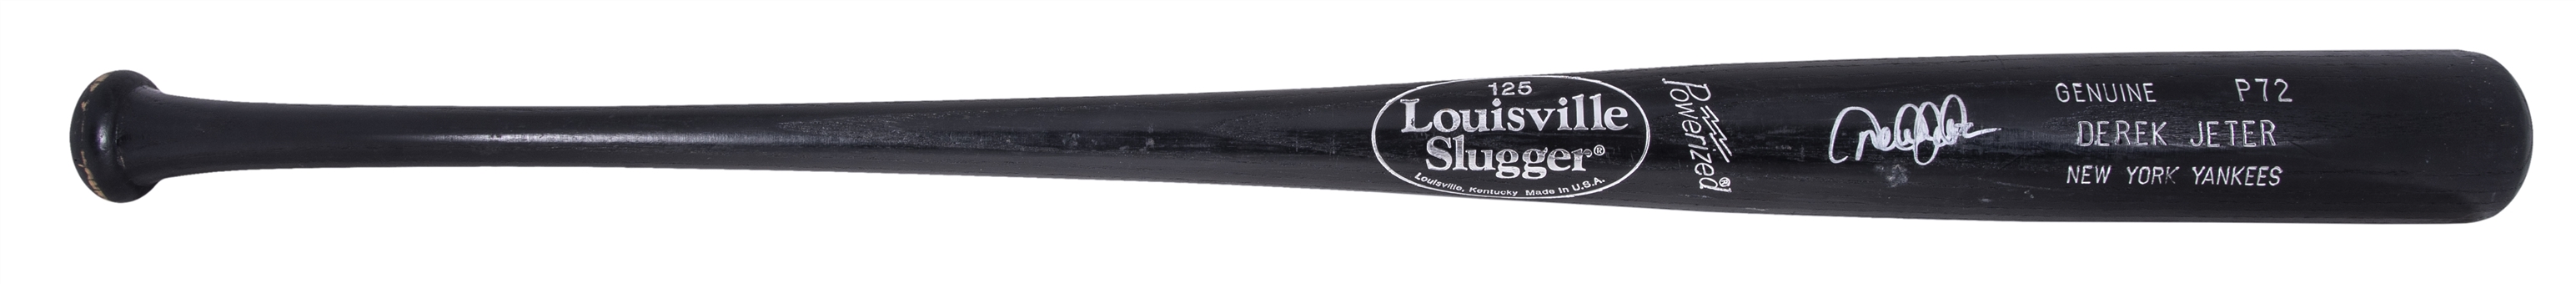 1998 Derek Jeter Game Used & Signed Louisville Slugger P72 Model Bat - World Series Champions and Team of the Century Season! (PSA/DNA GU 8.5 & JSA)